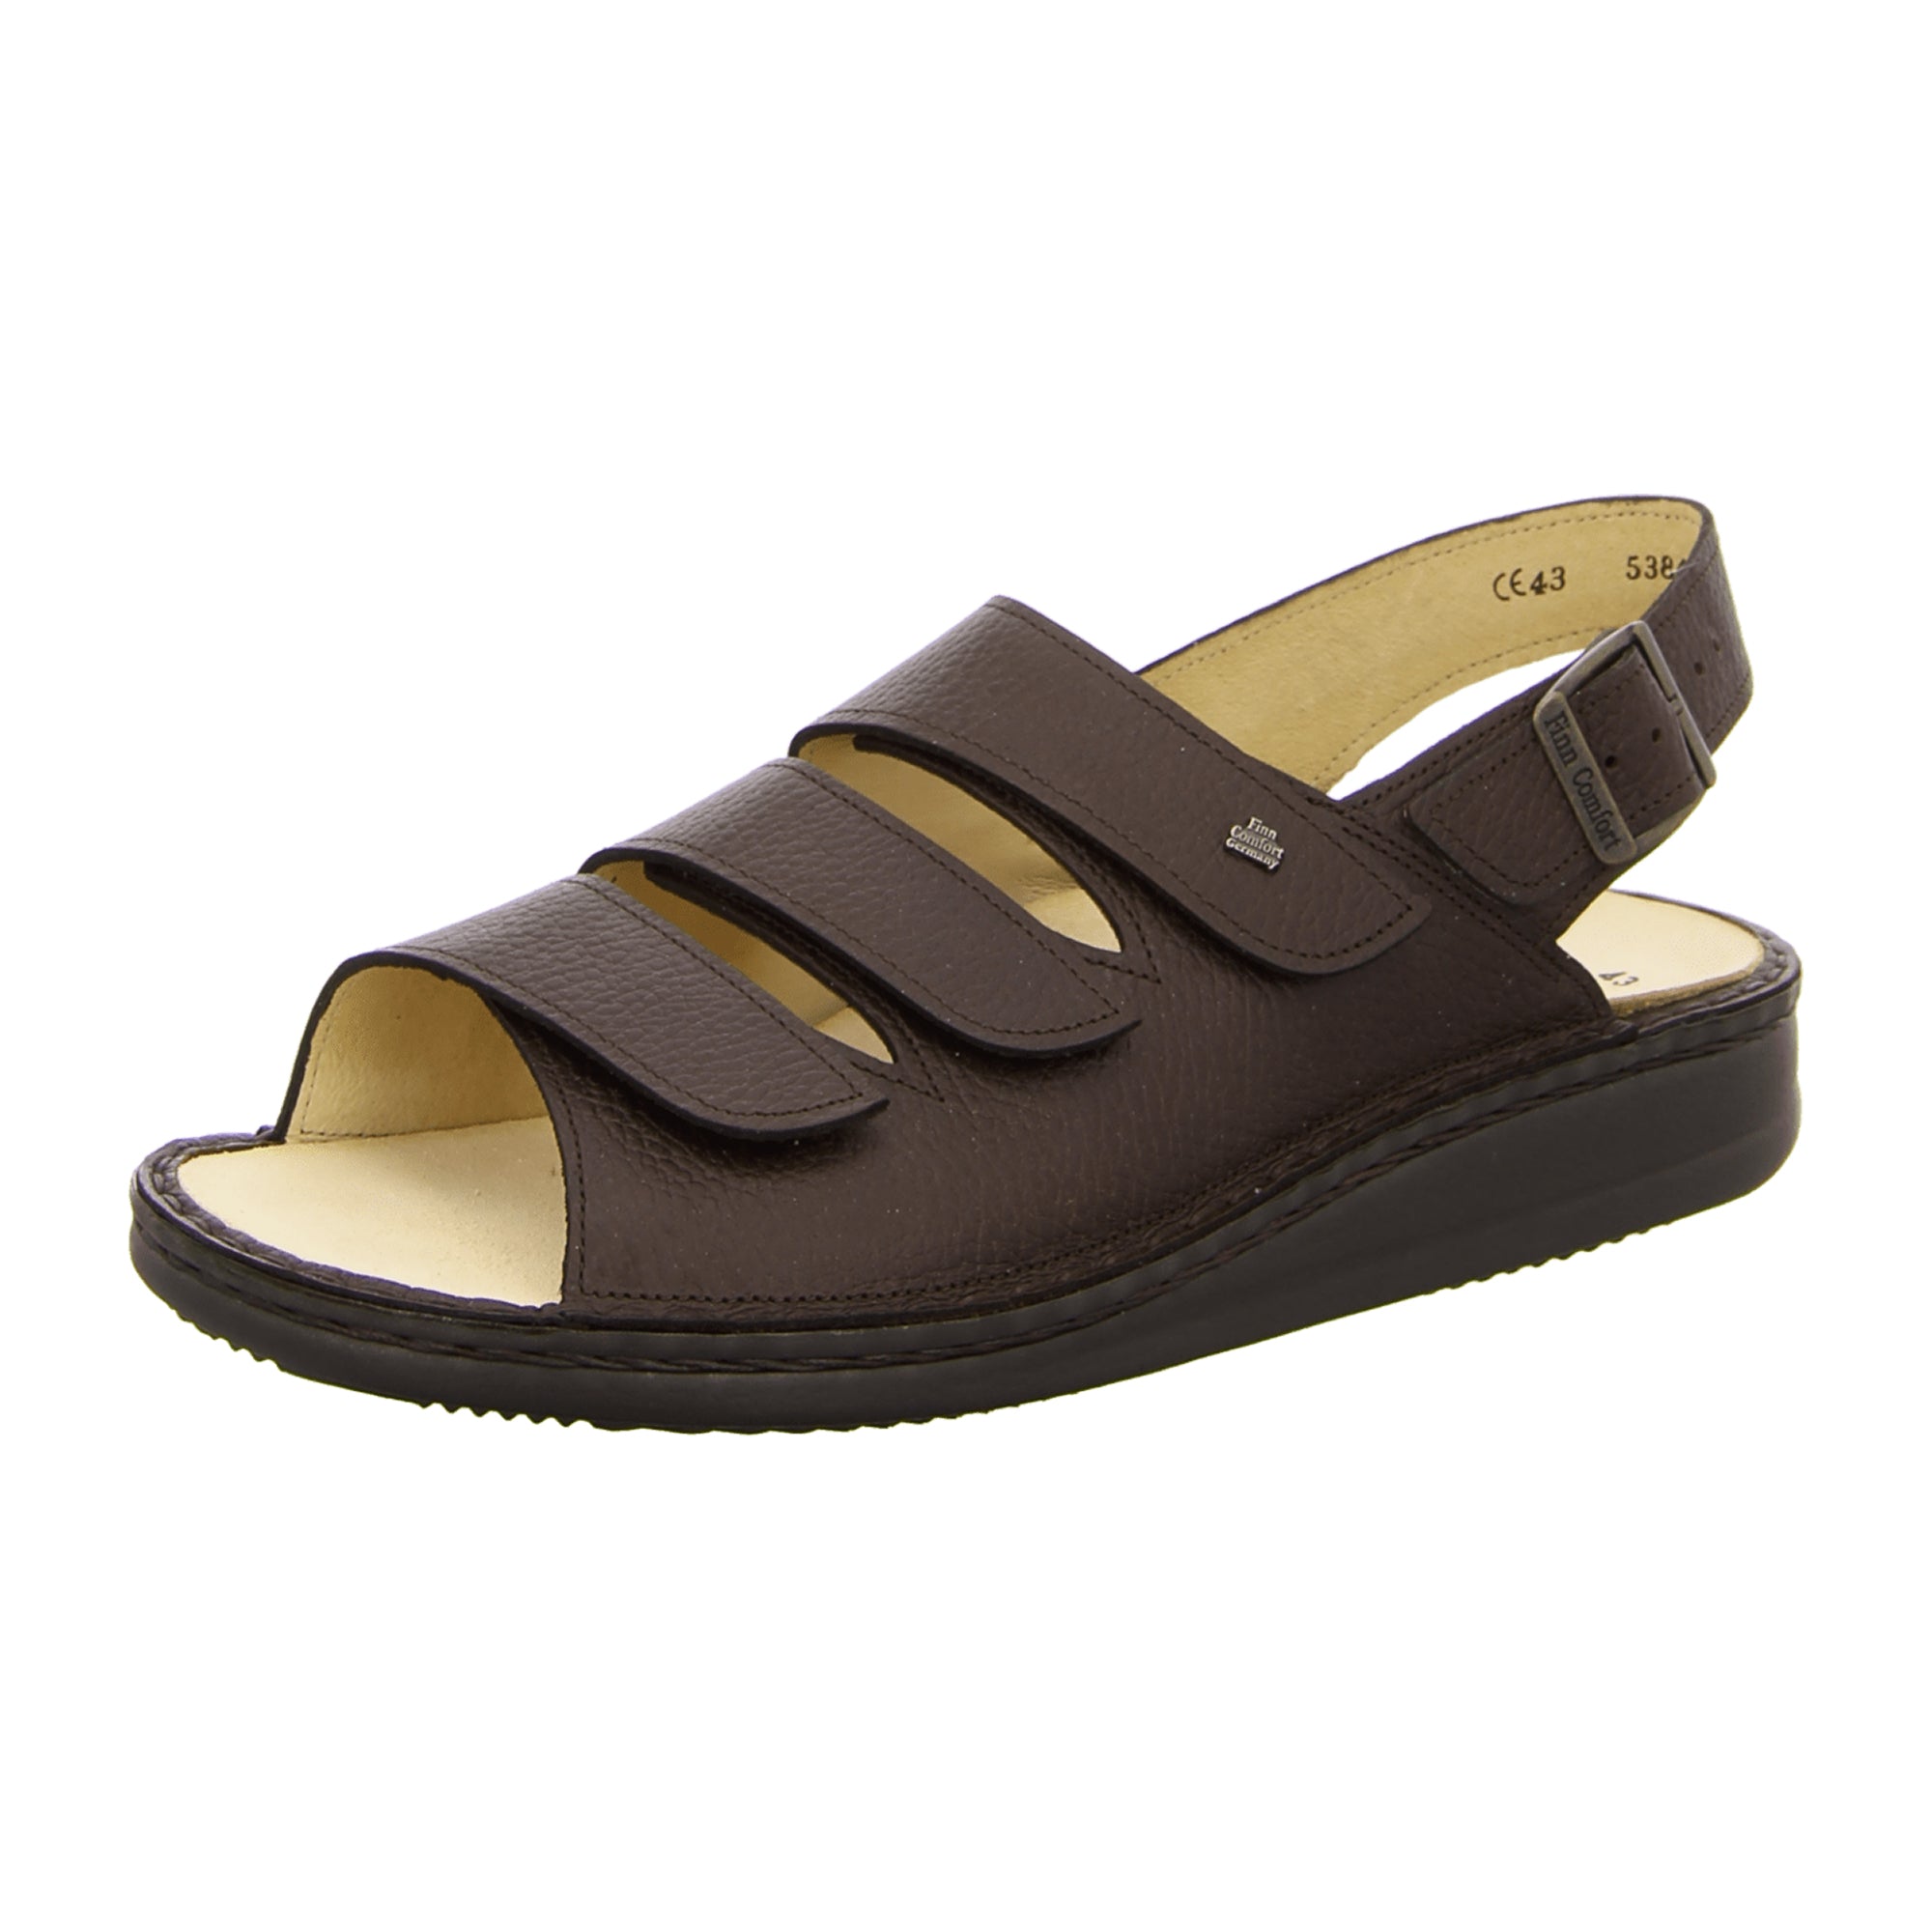 Finn Comfort Sylt Men's Brown Sandals - Stylish & Durable